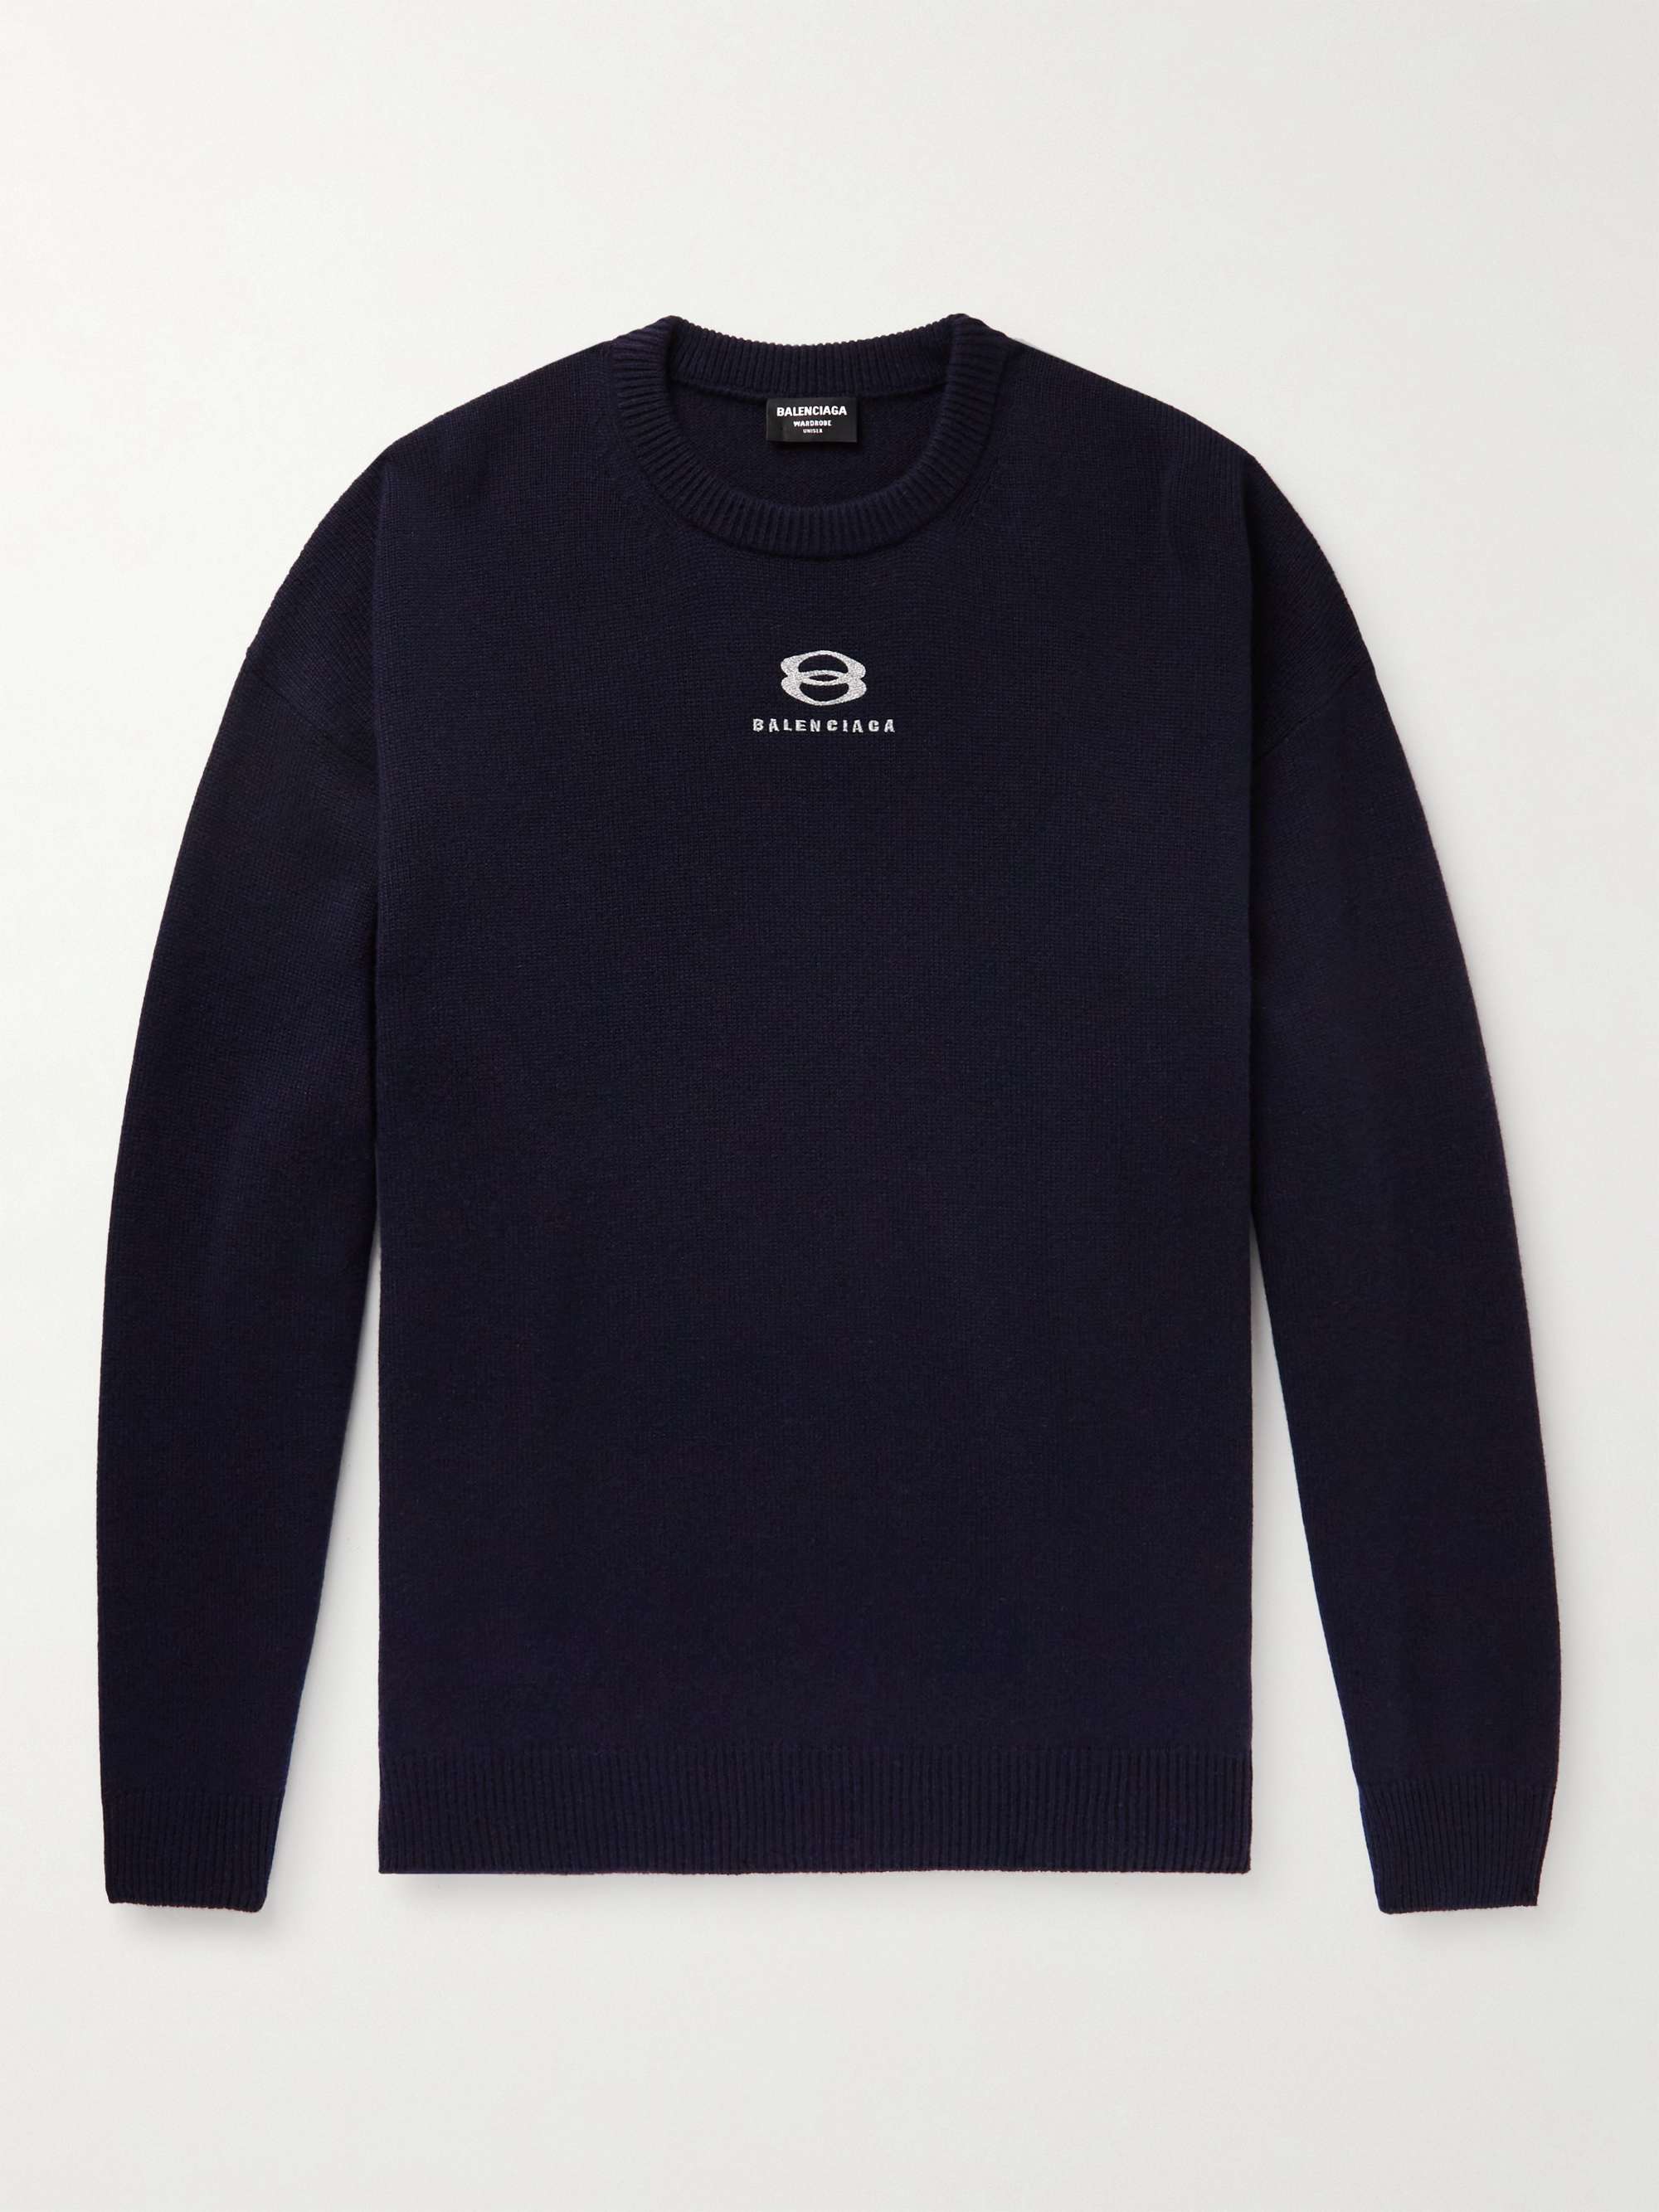 BALENCIAGA Logo-Embroidered Cashmere Sweater for Men | MR PORTER